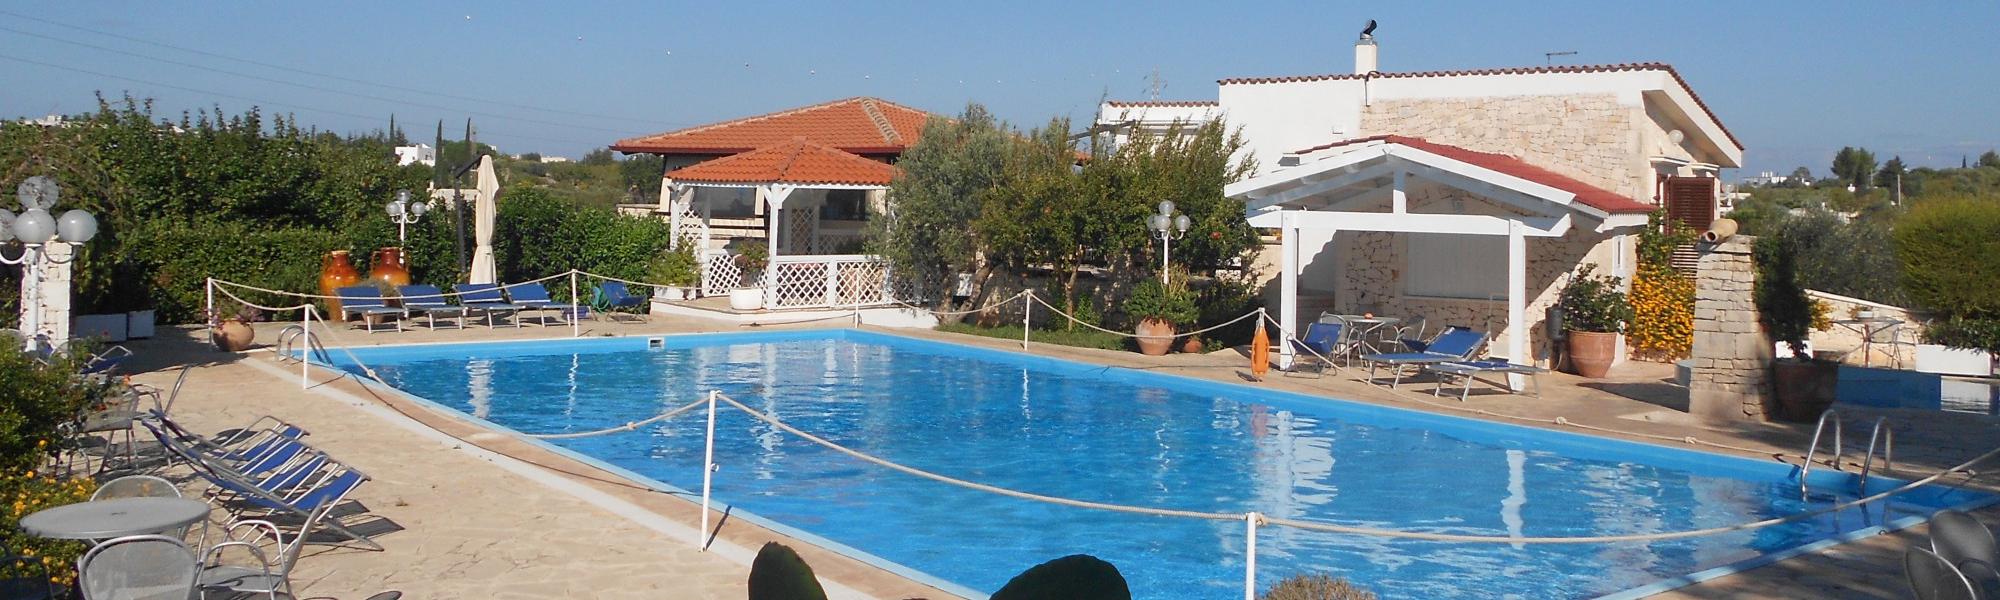 Hotel mit pool Apulien Salento - Agriturismo Salinola Ostuni 7